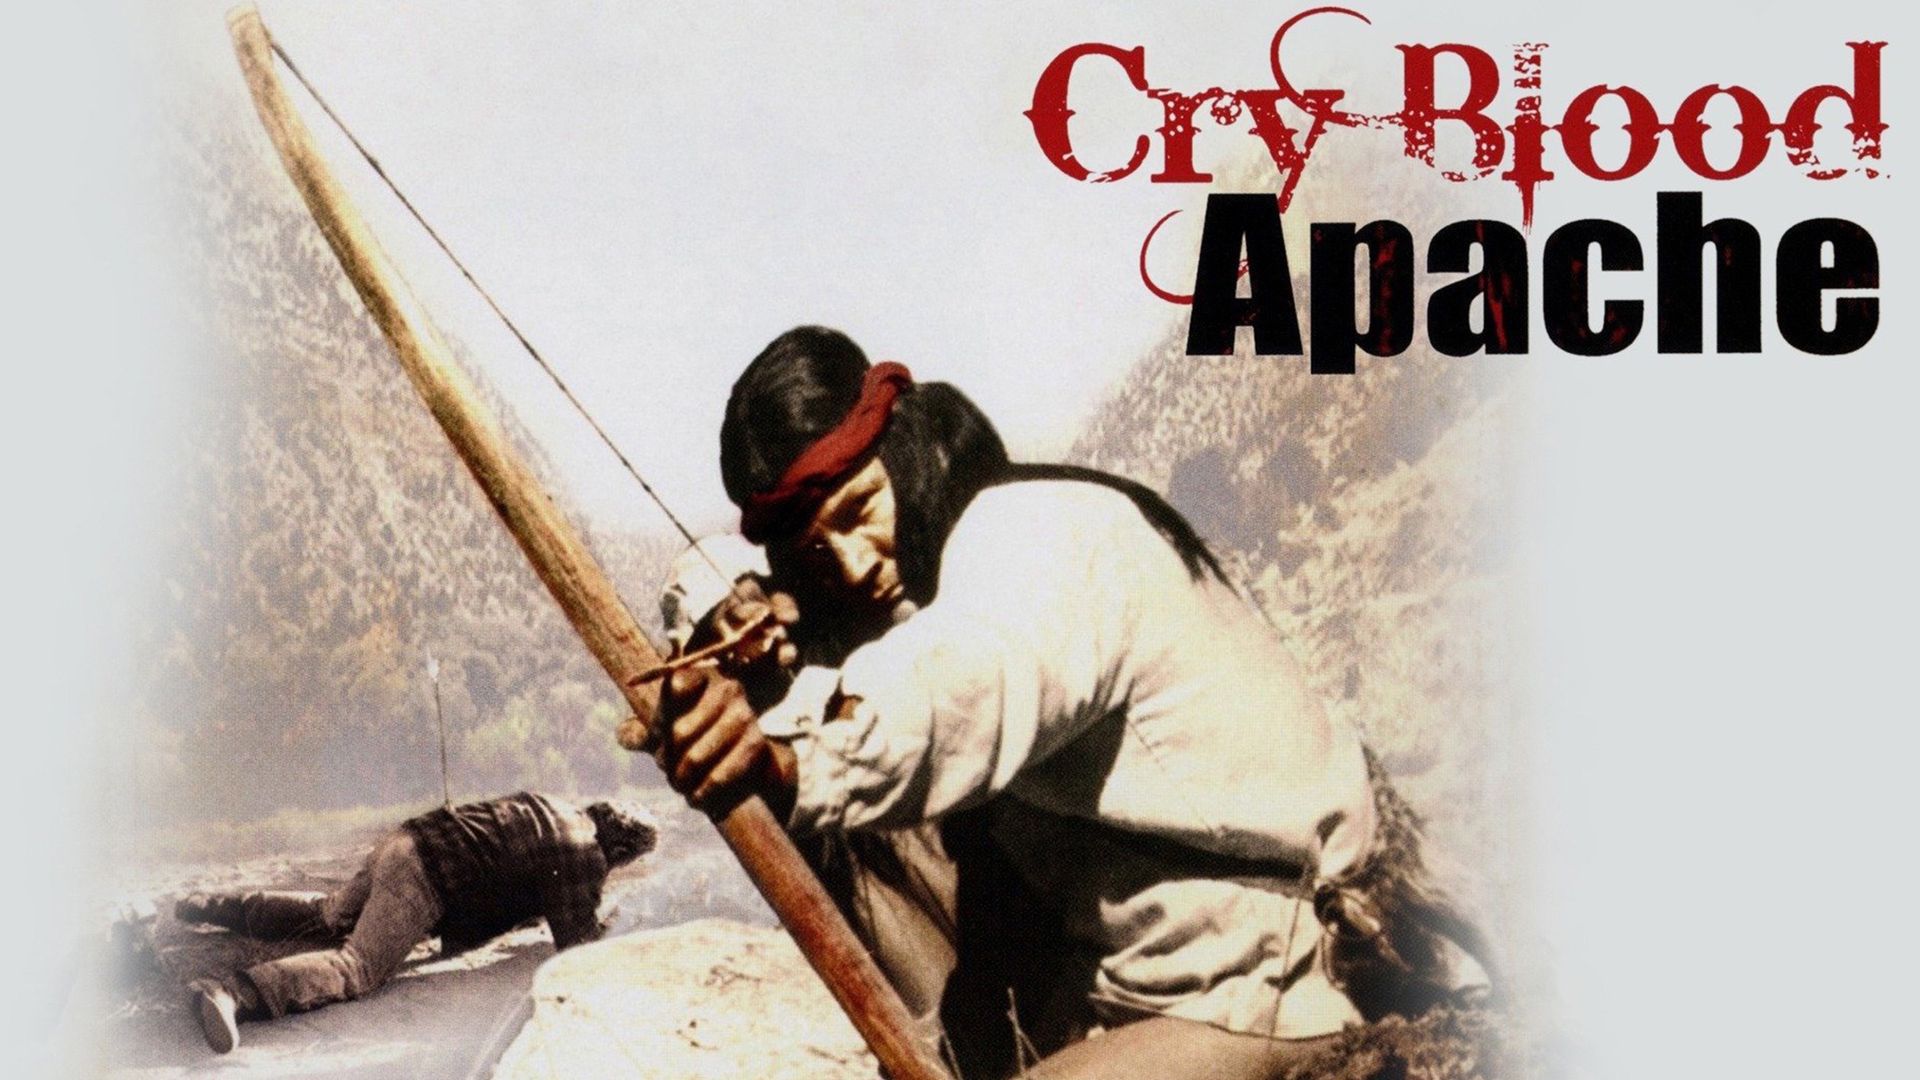 Cry Blood, Apache Backdrop